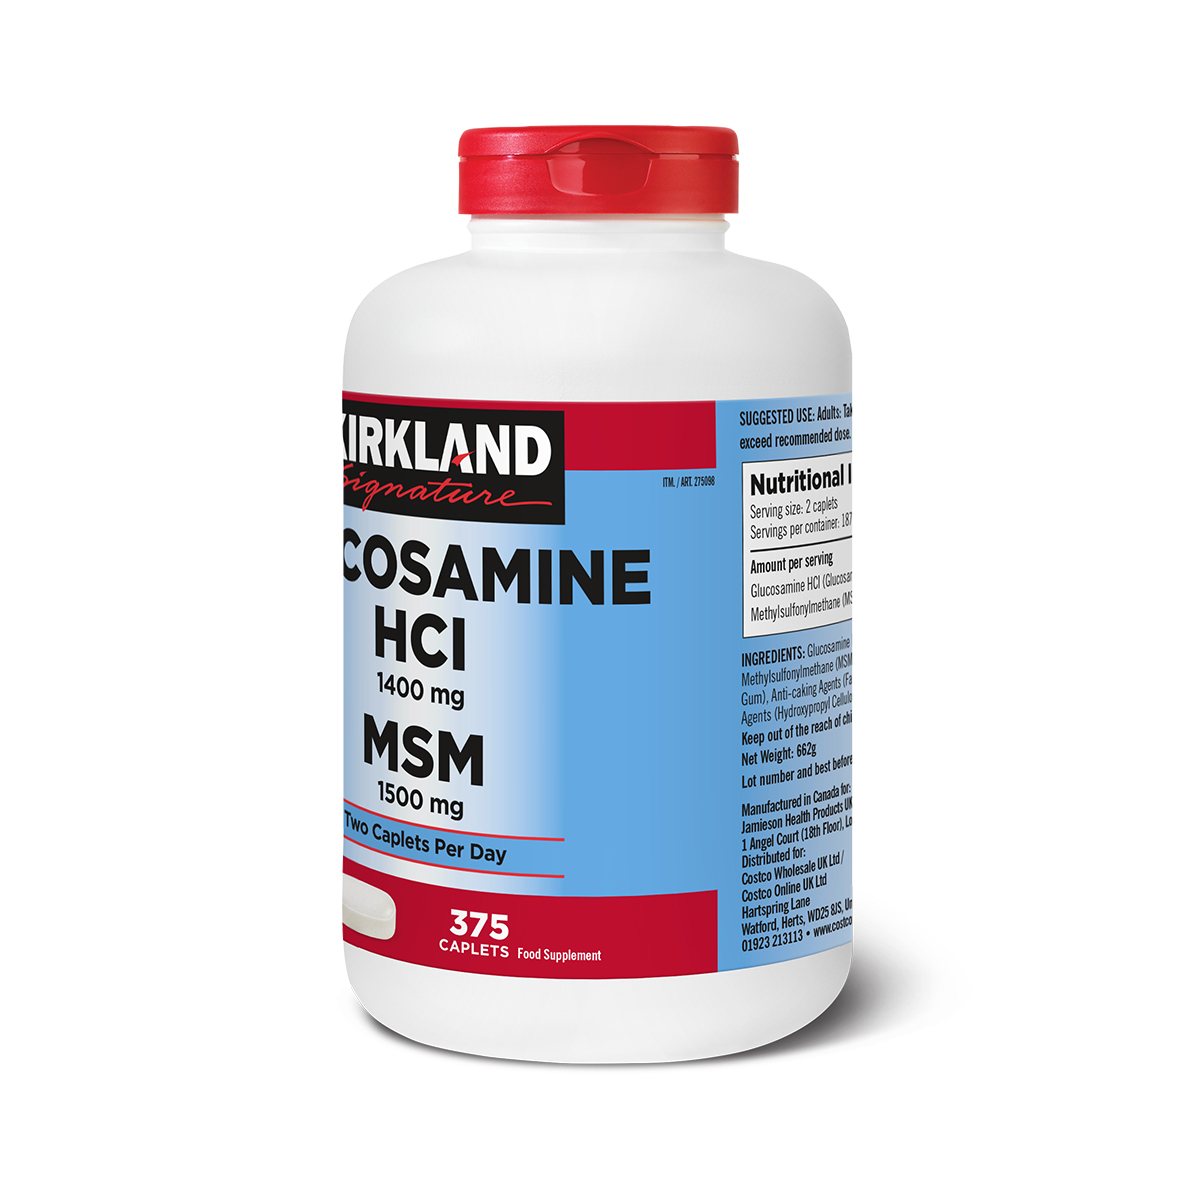 Kirkland Signature Glucosamine HCI & MSM, 375ct